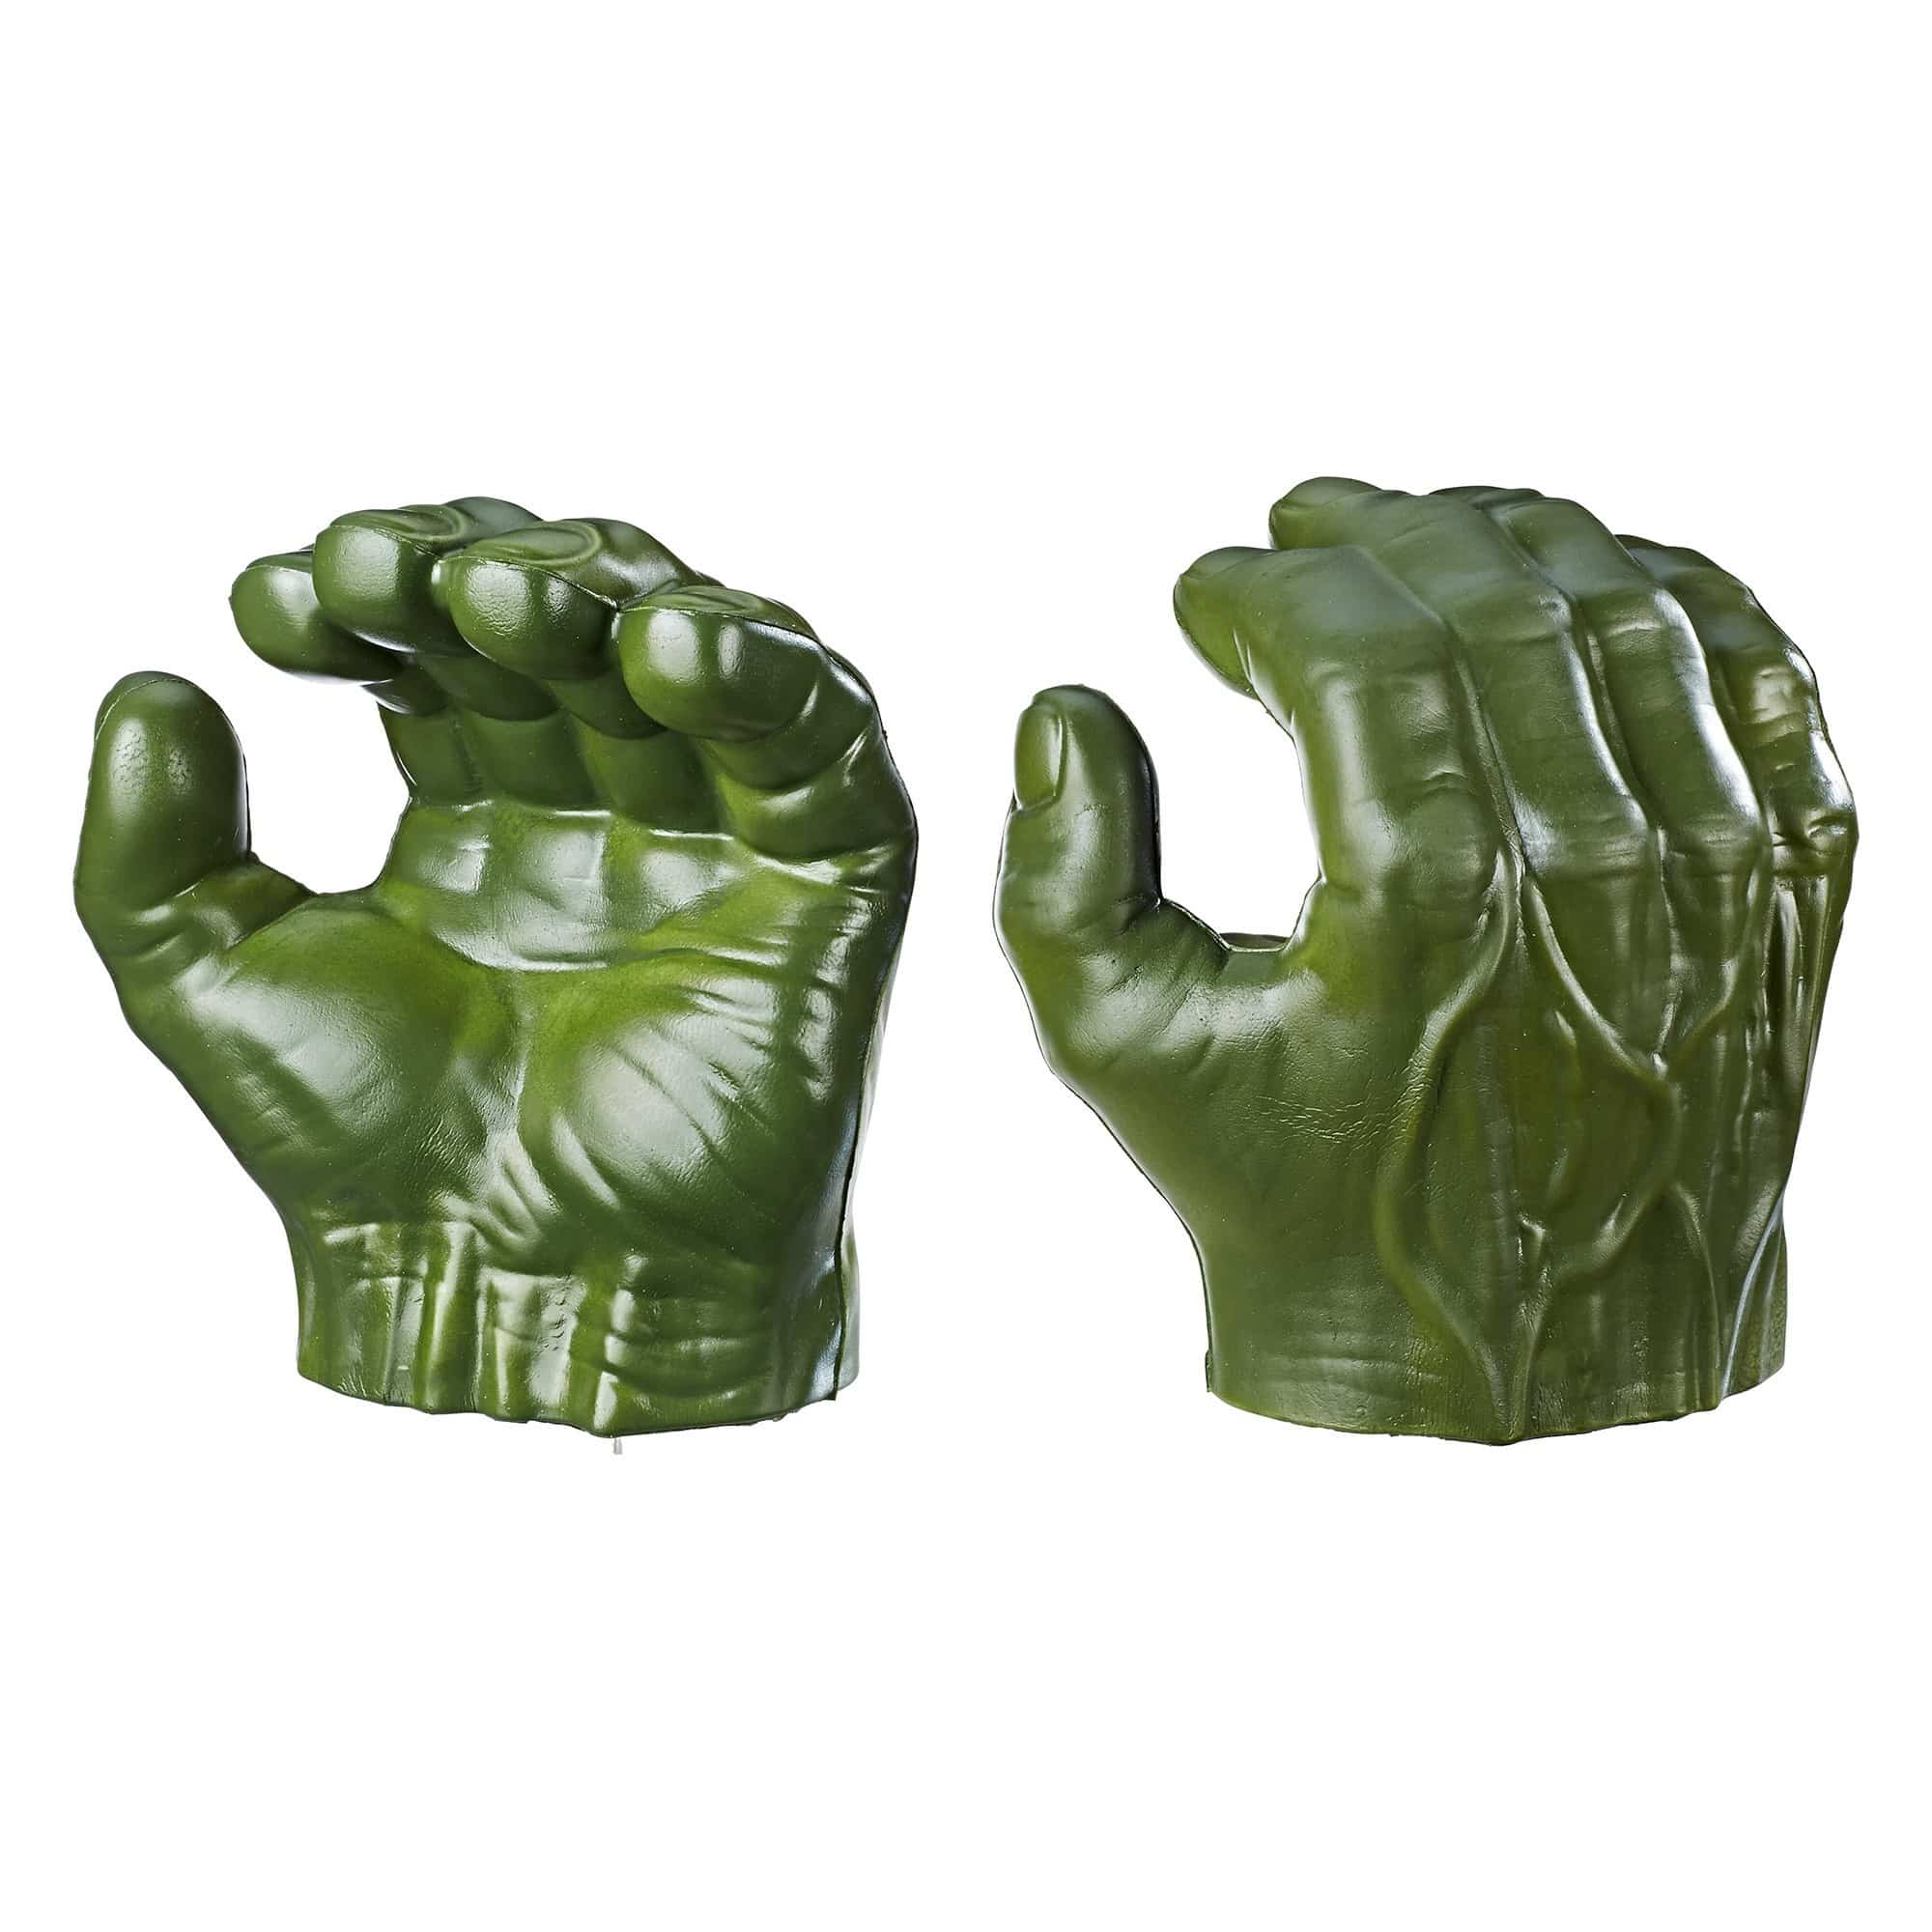 Marvel Avengers - Gamma Grip Hulk Fists